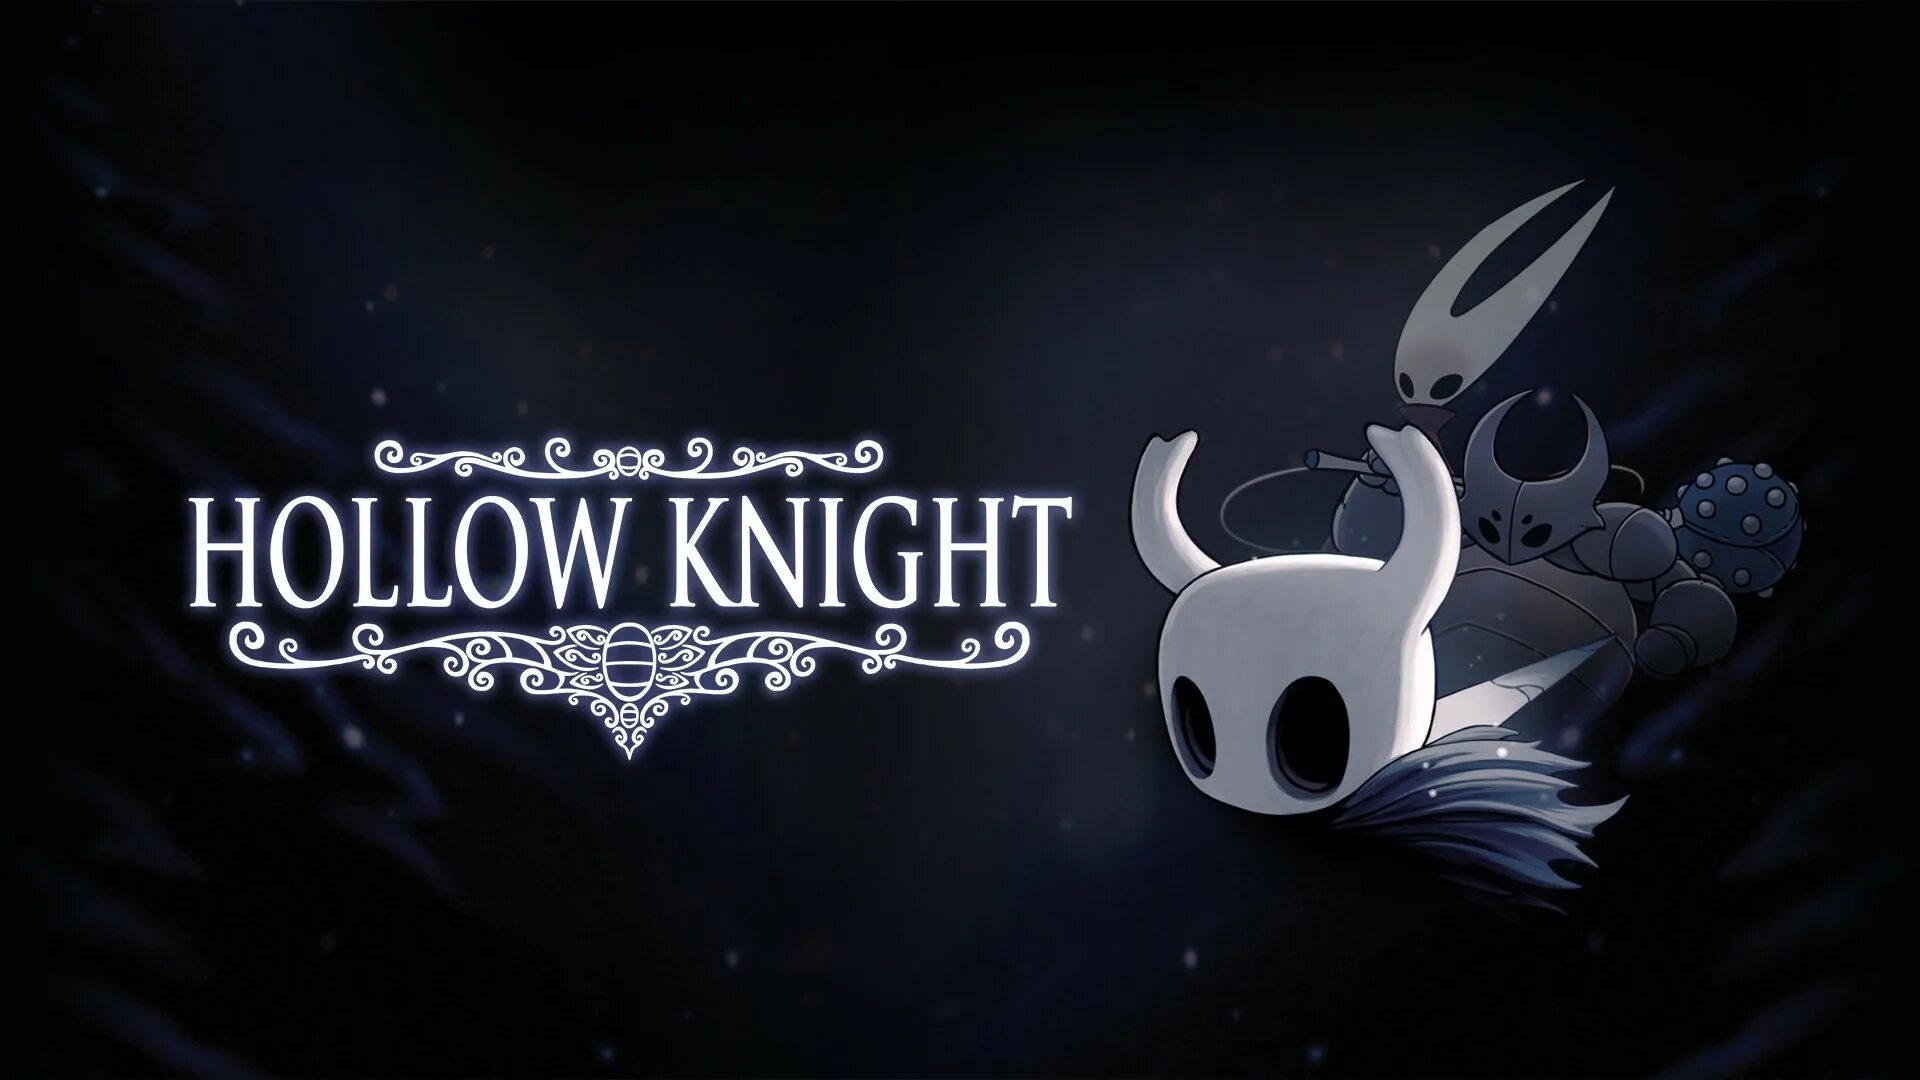 Hollow knight что делать. Полый рыцарь Hollow Knight. Hollow Knight полый рыцарь заставка. Полый рыцарь Hollow Knight босс. Холлов Найт полый рыцарь.